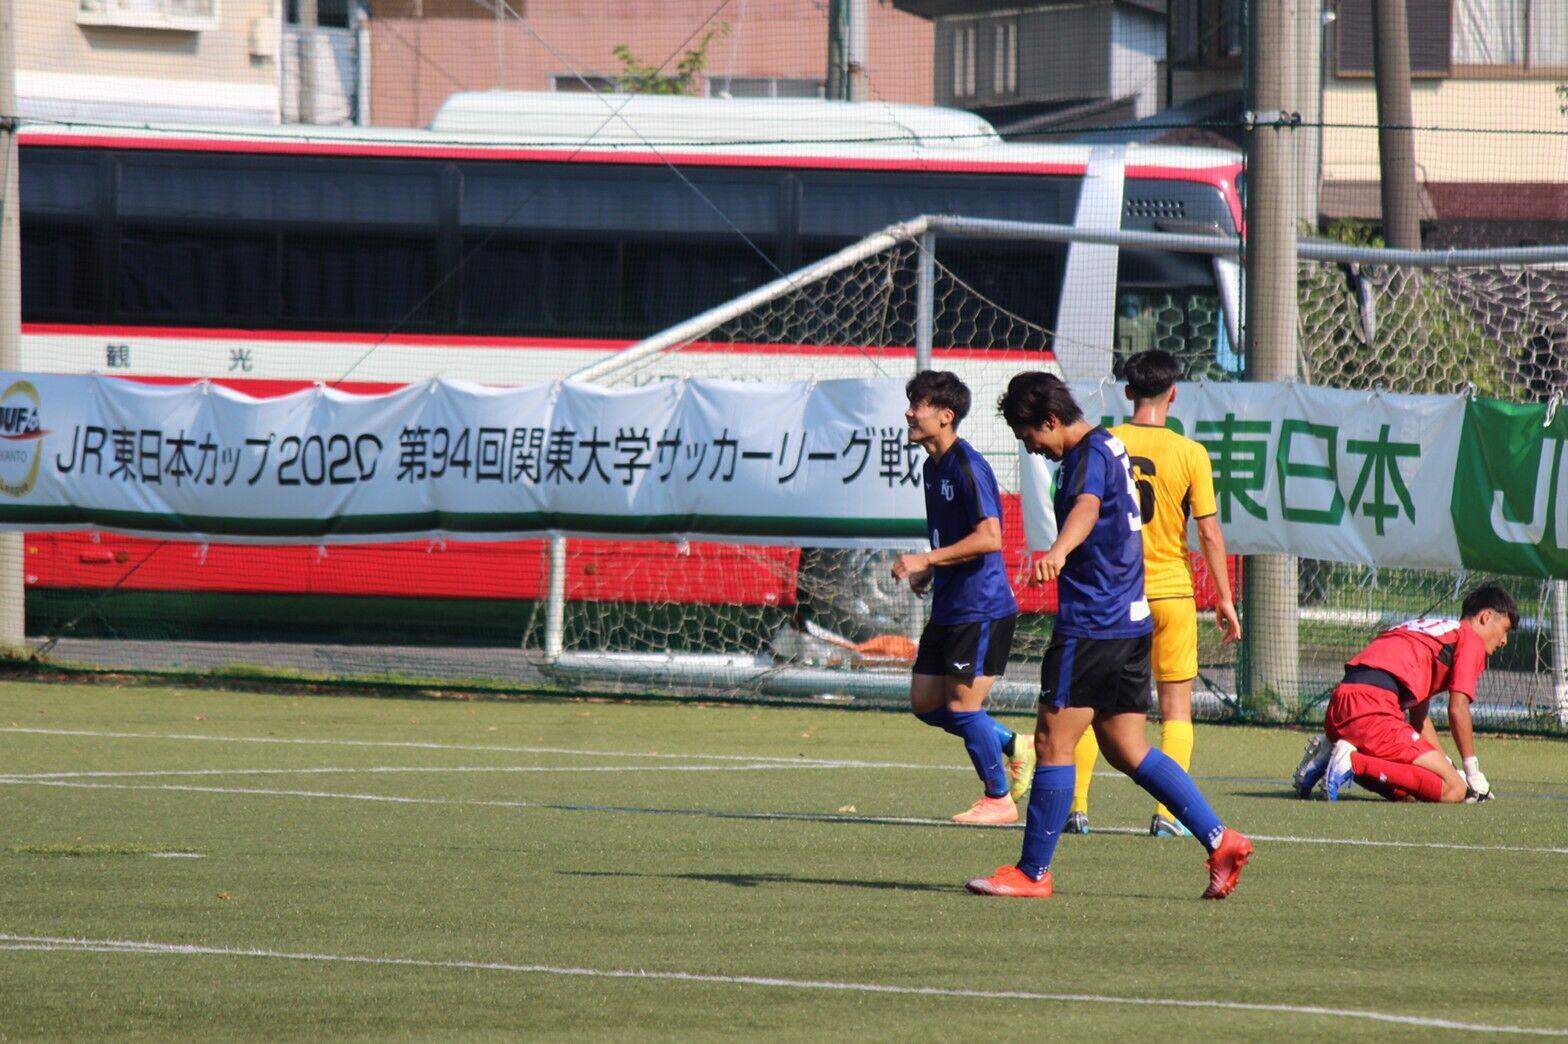 https://football.ku-sports.jp/blog/photoreport/images/20200831201018.jpg